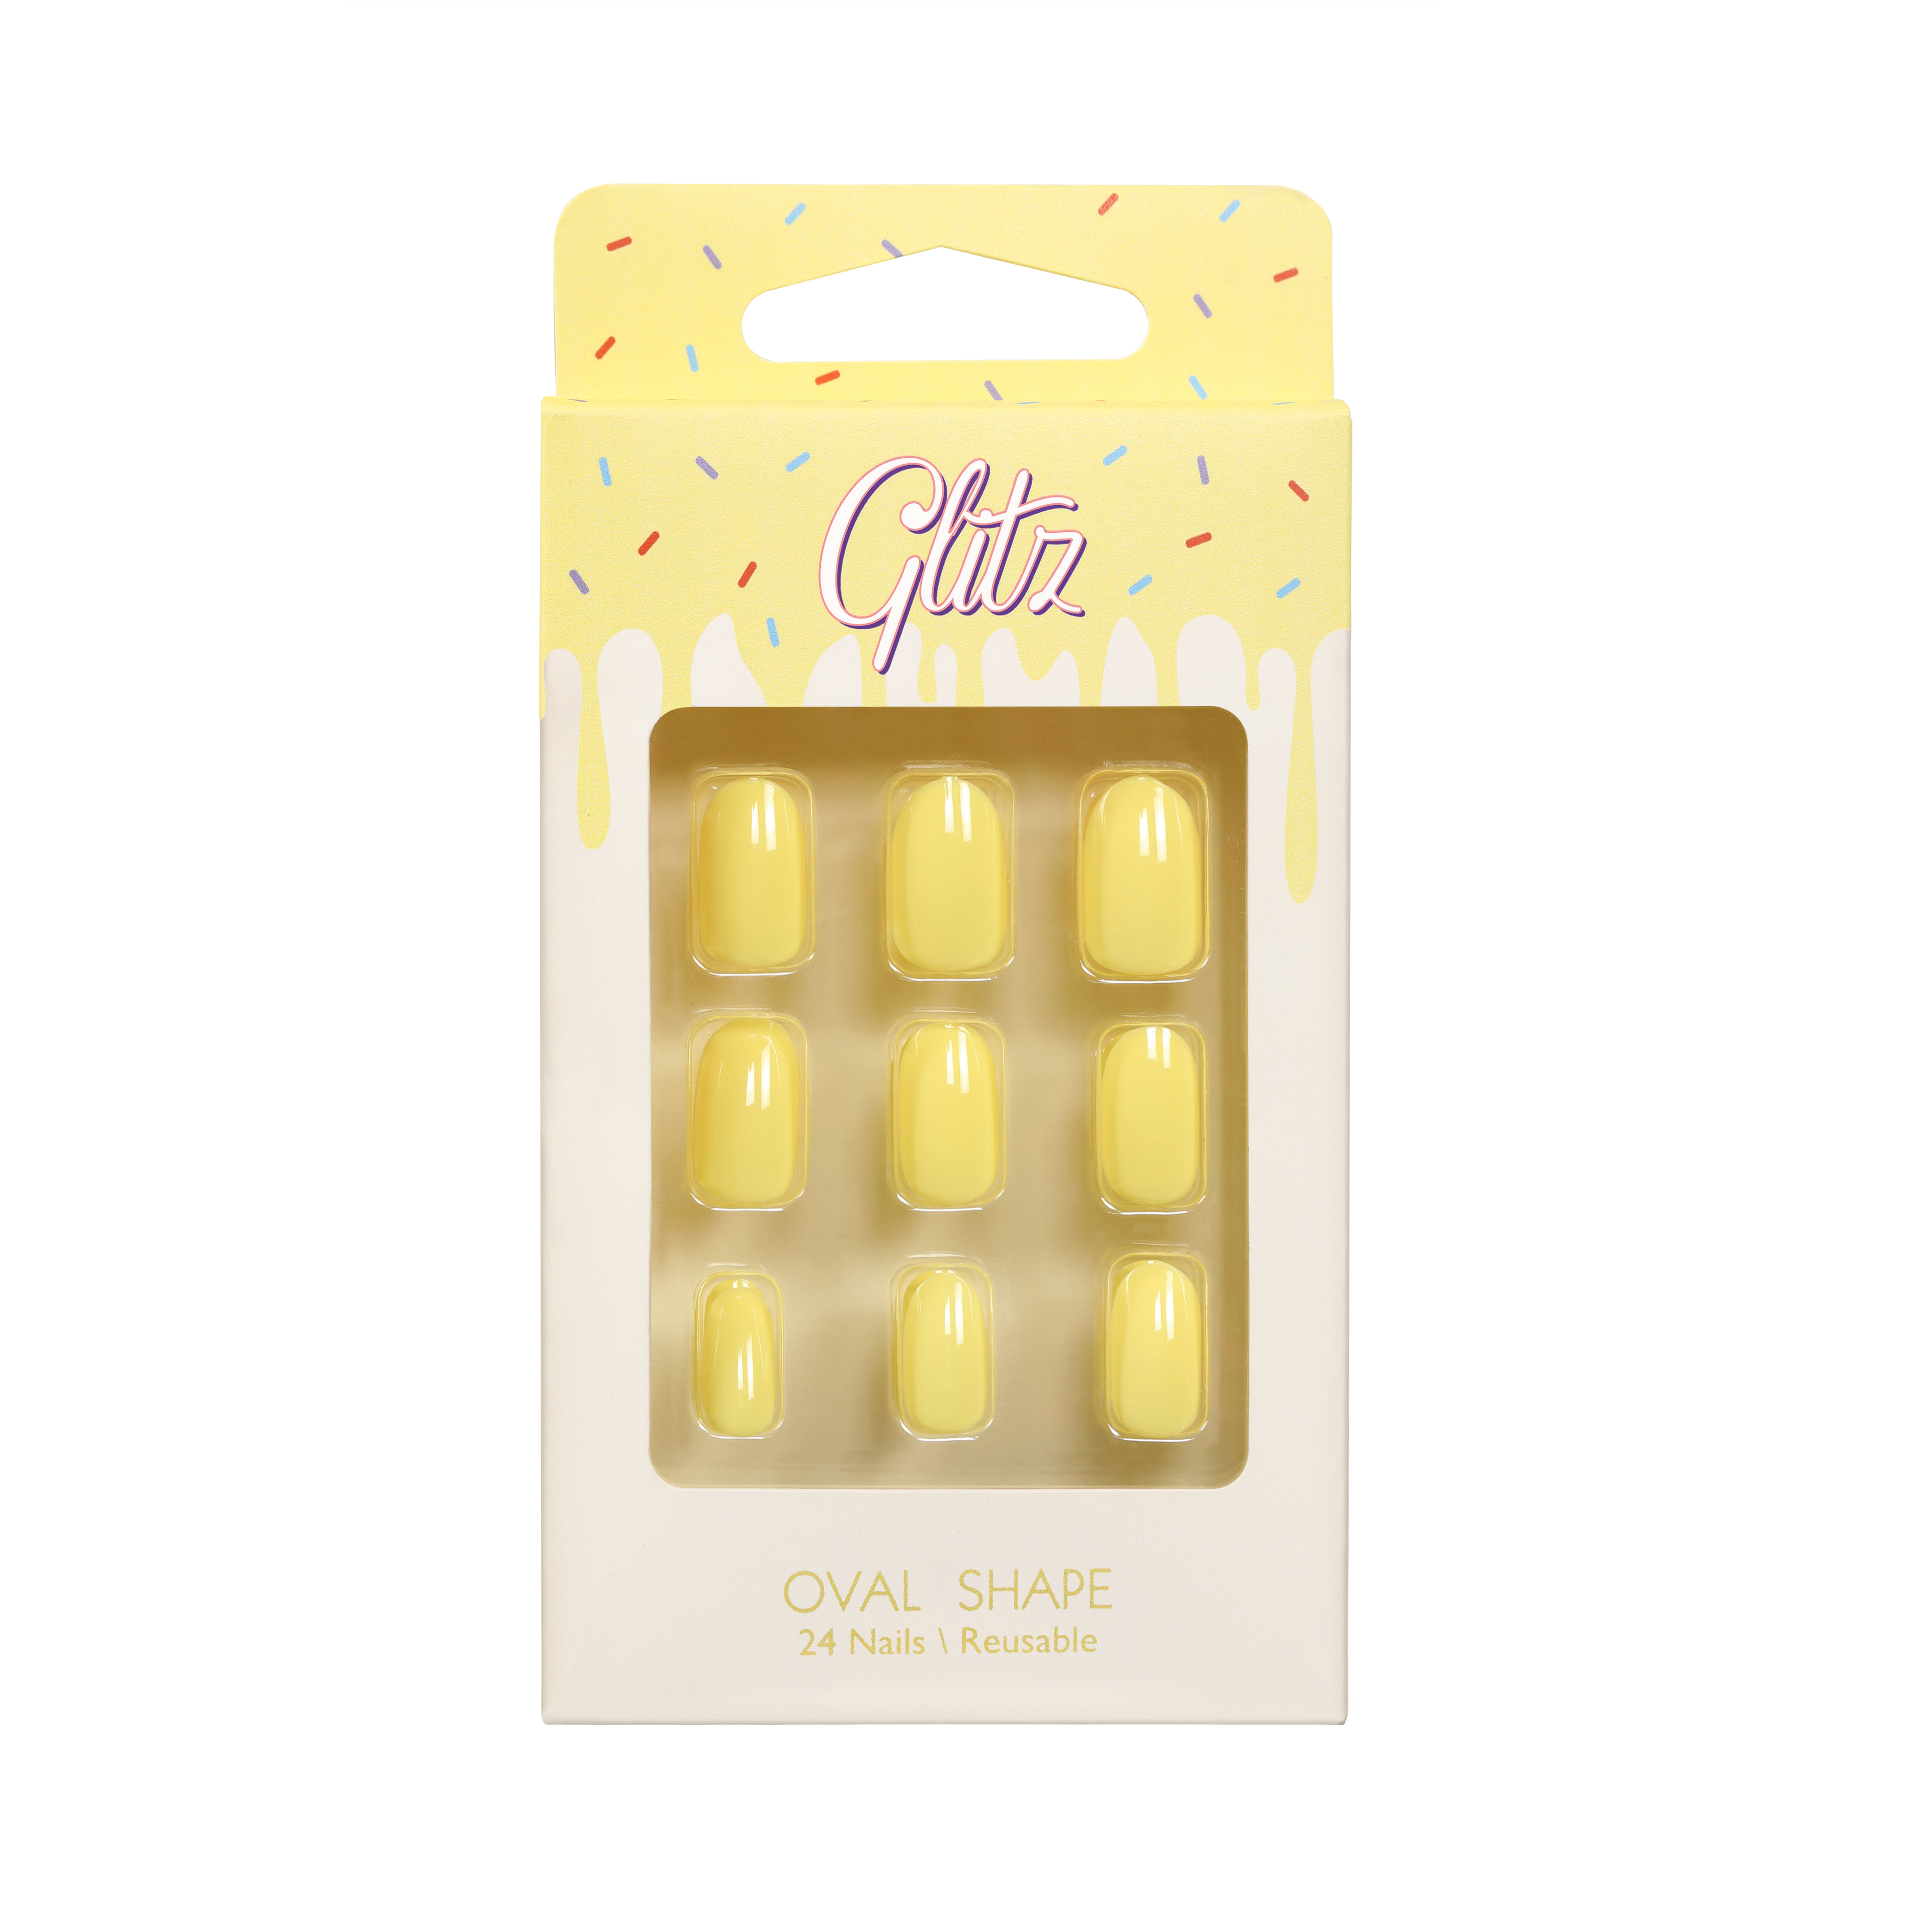 Glitz Nails oval shape Lemonad